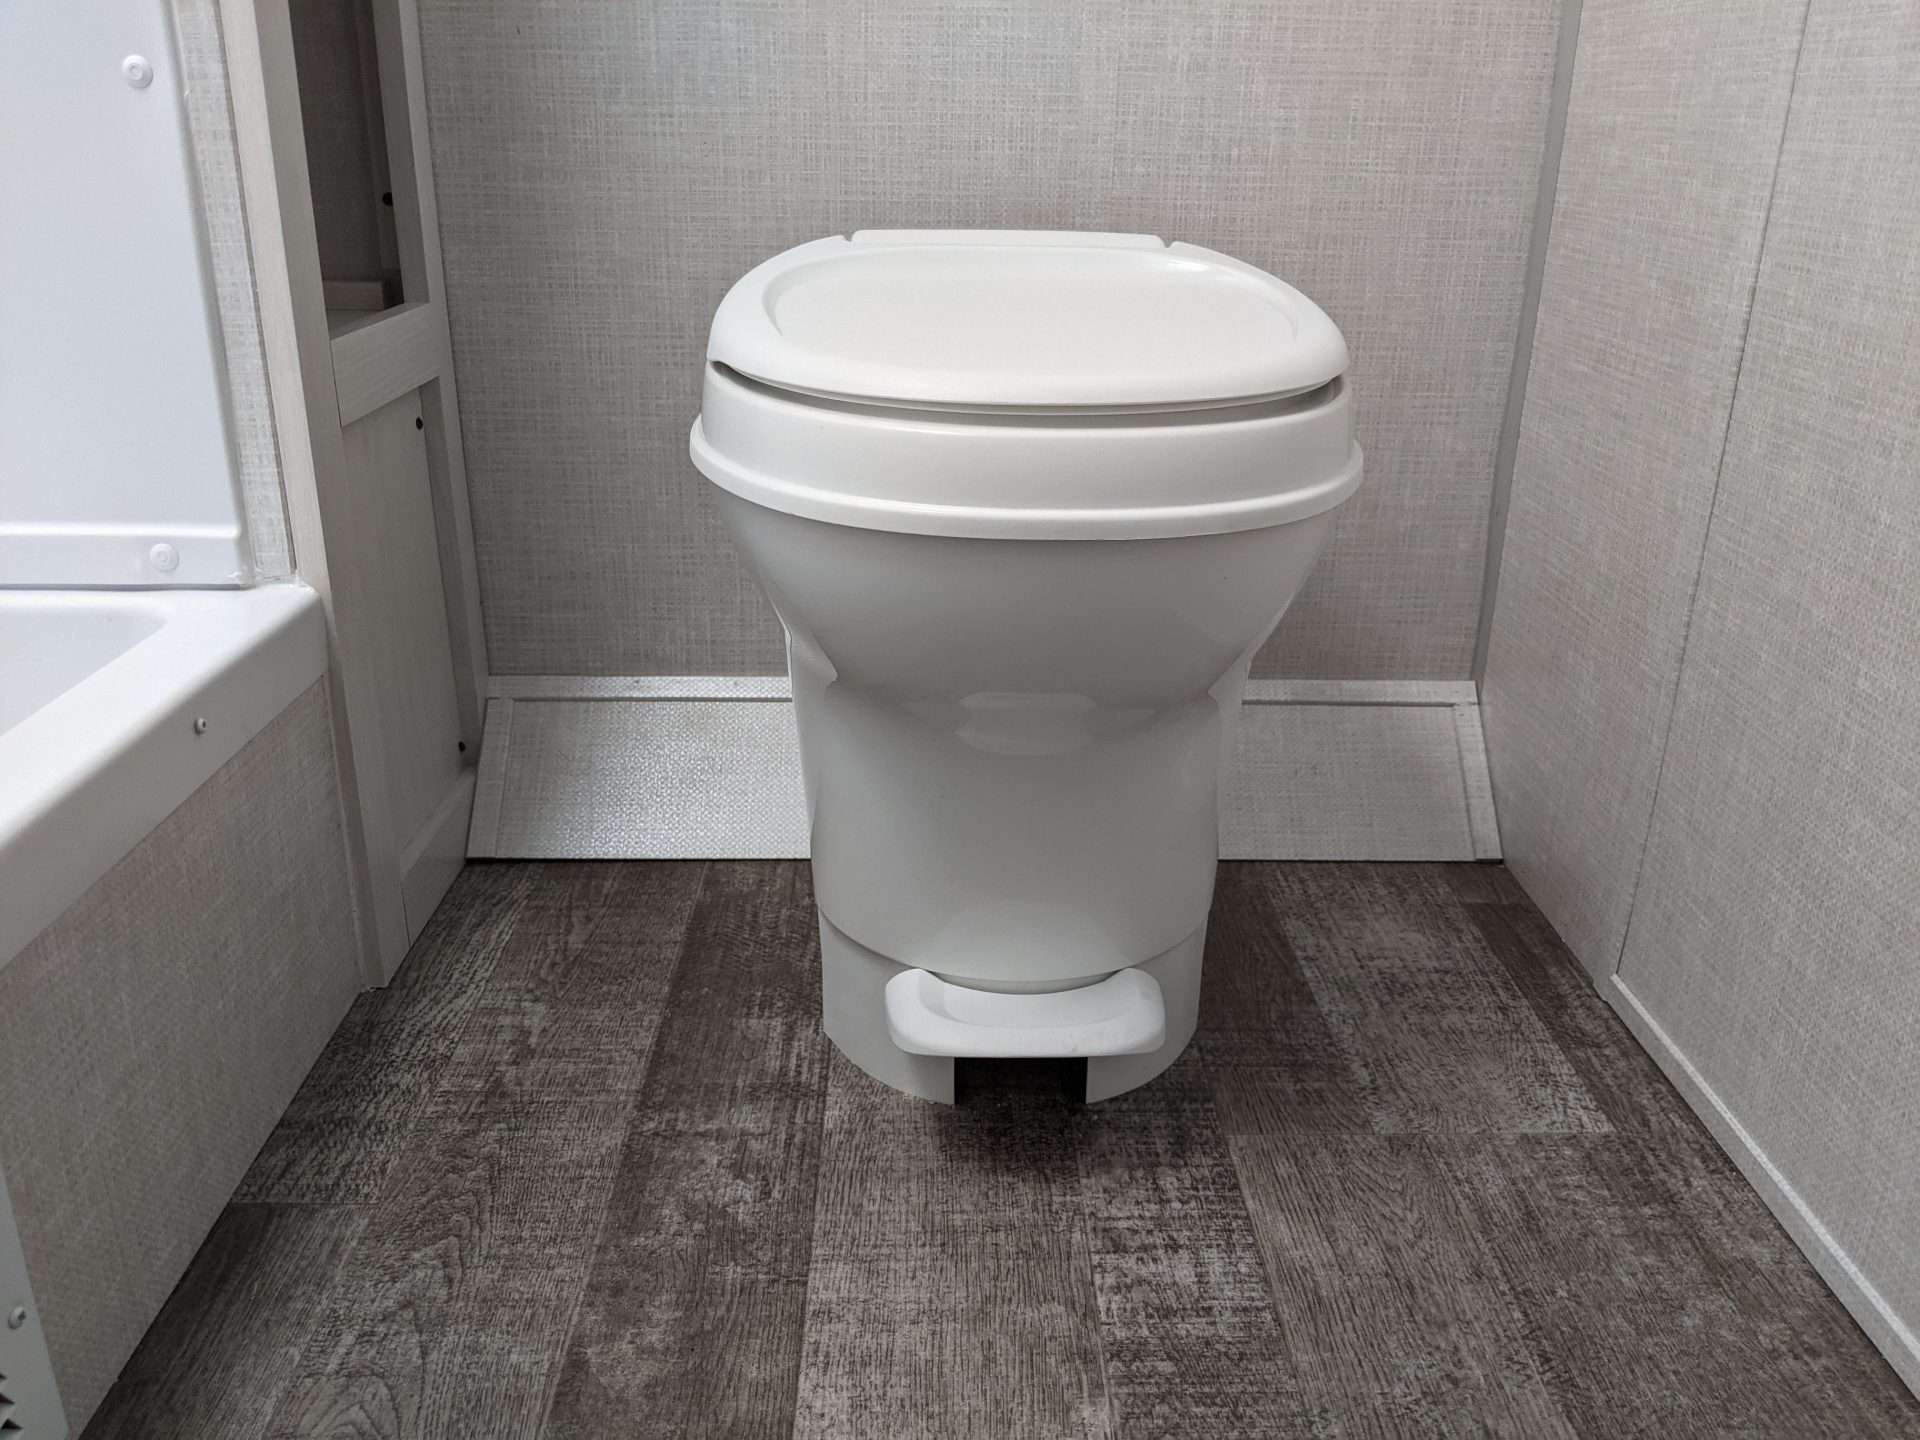 RV gravity flush toilet